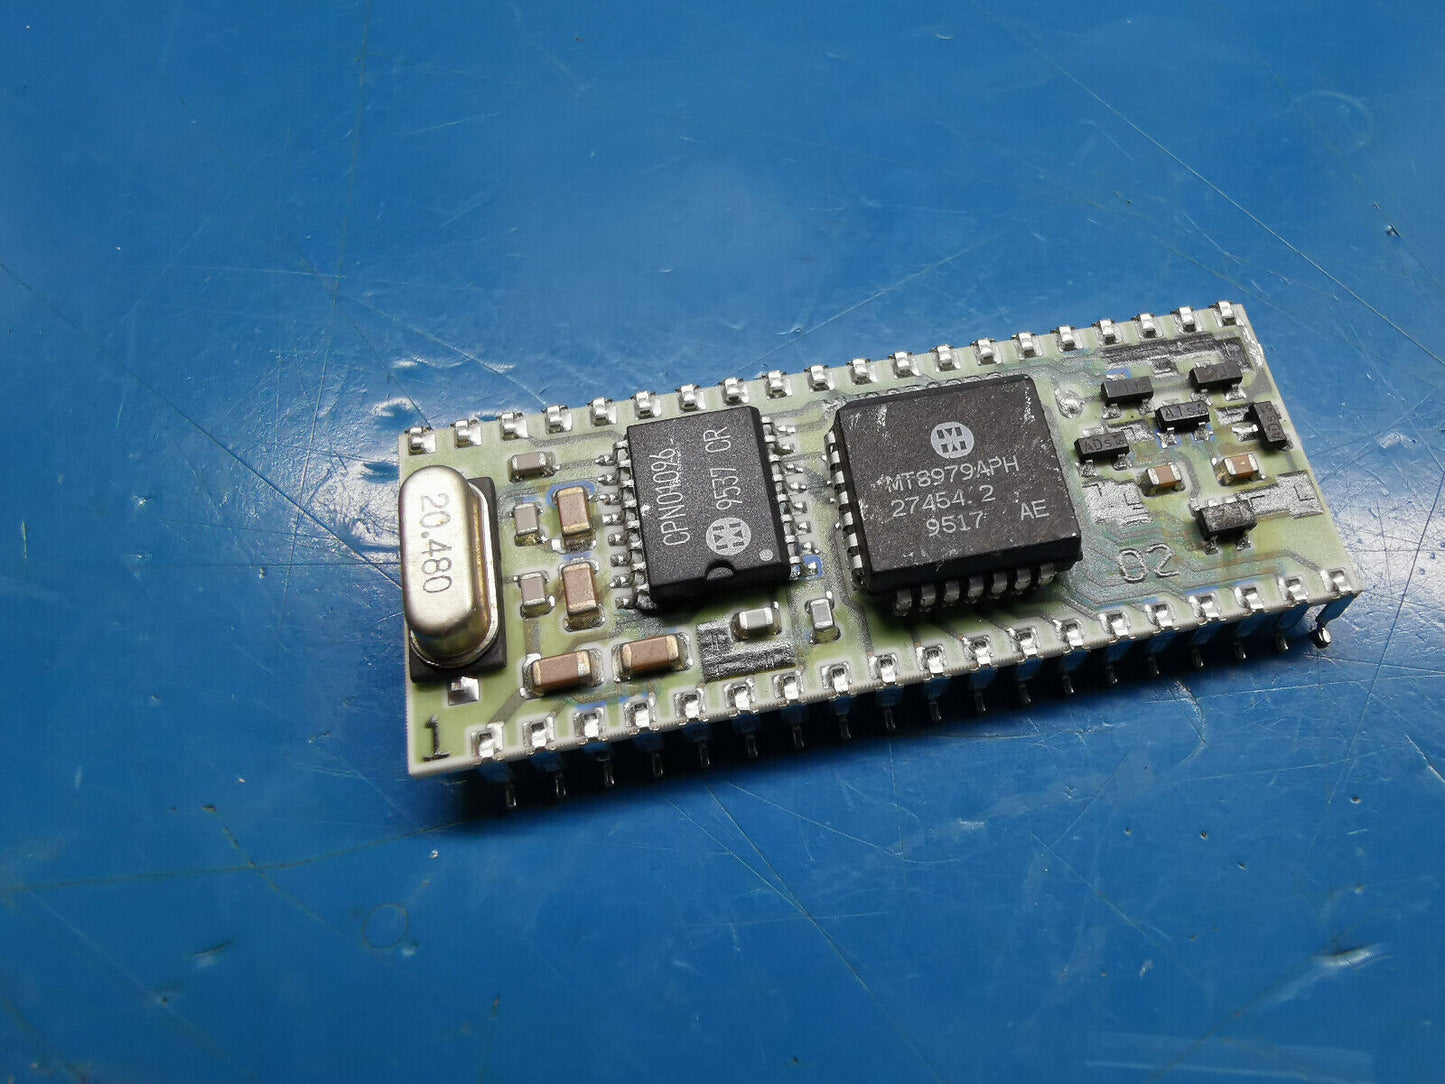 Mitel MT8979 CEPT Digital  Trunk Transceiver IC And Parts Ceramic PCB Module